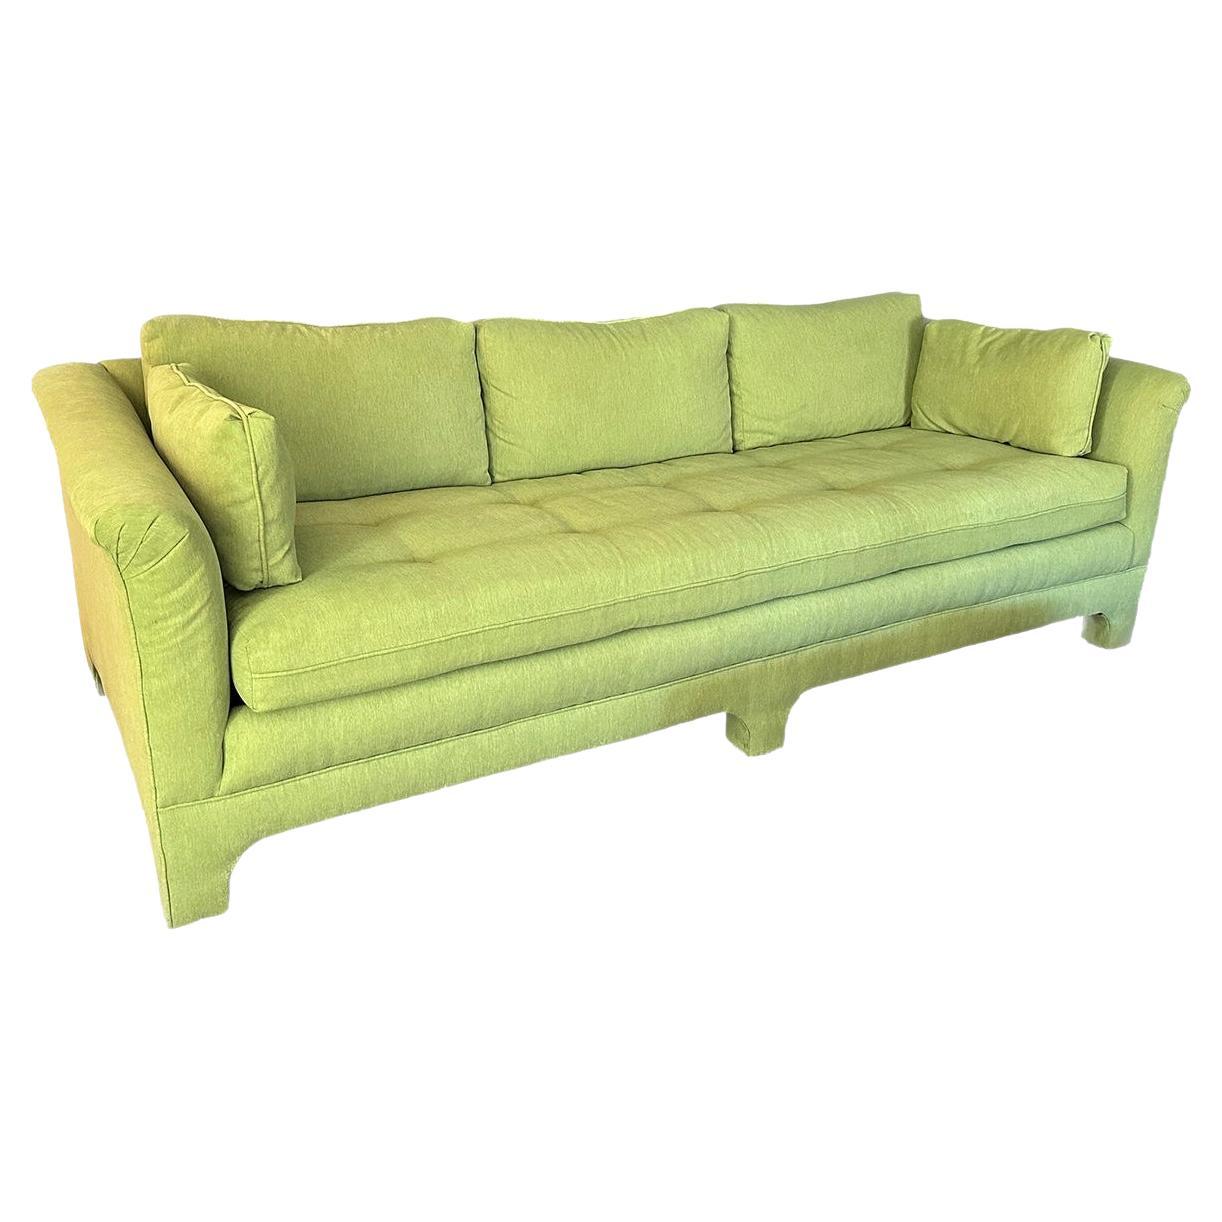 Vintage 70er Jahre Sitzbank Sofa, neu gepolstert mit Chartreuse Crypton-Stoff